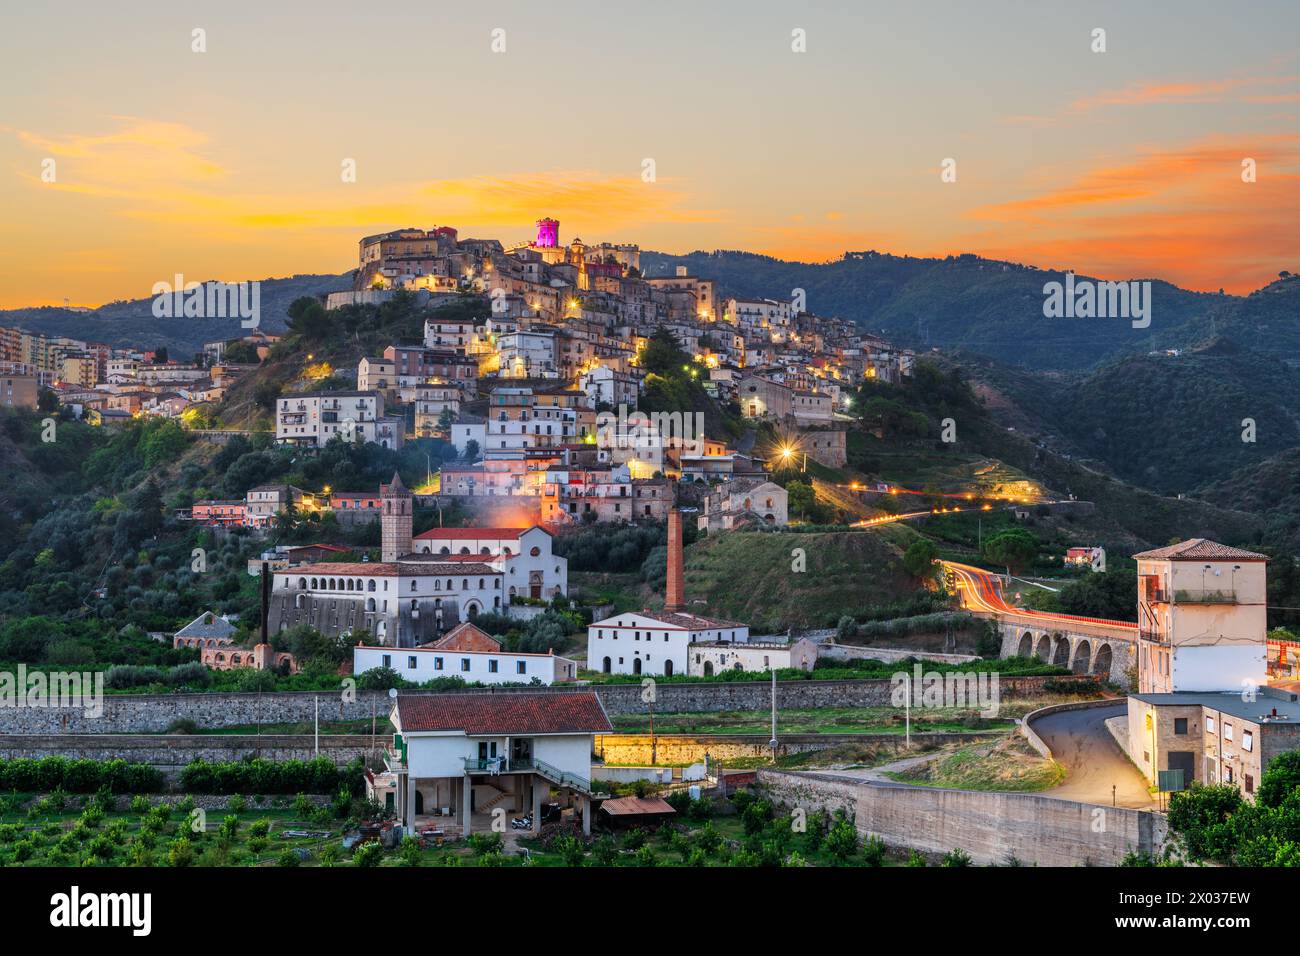 Corigliano Calabro, Italy hilltop townscape at golden hour. Stock Photo